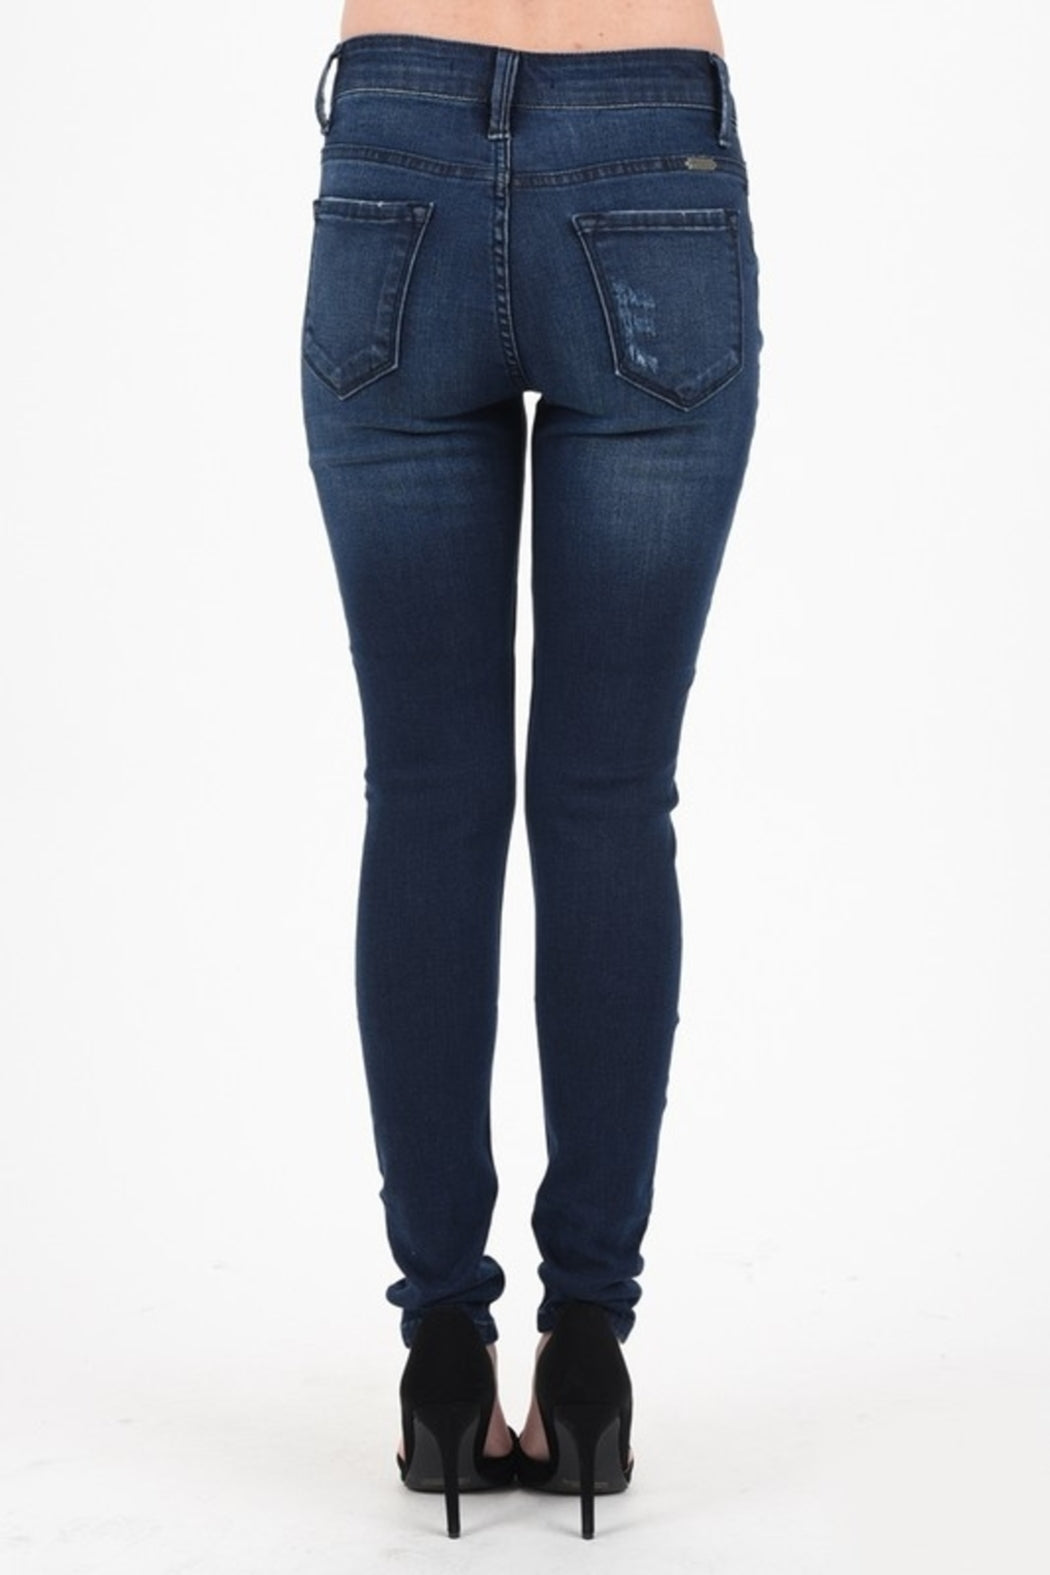 Mississippi KanCan Mid Rise Super Skinny Jeans-jeans-Emporium B, Women's Online Fashion Boutique in Colman, South Dakota